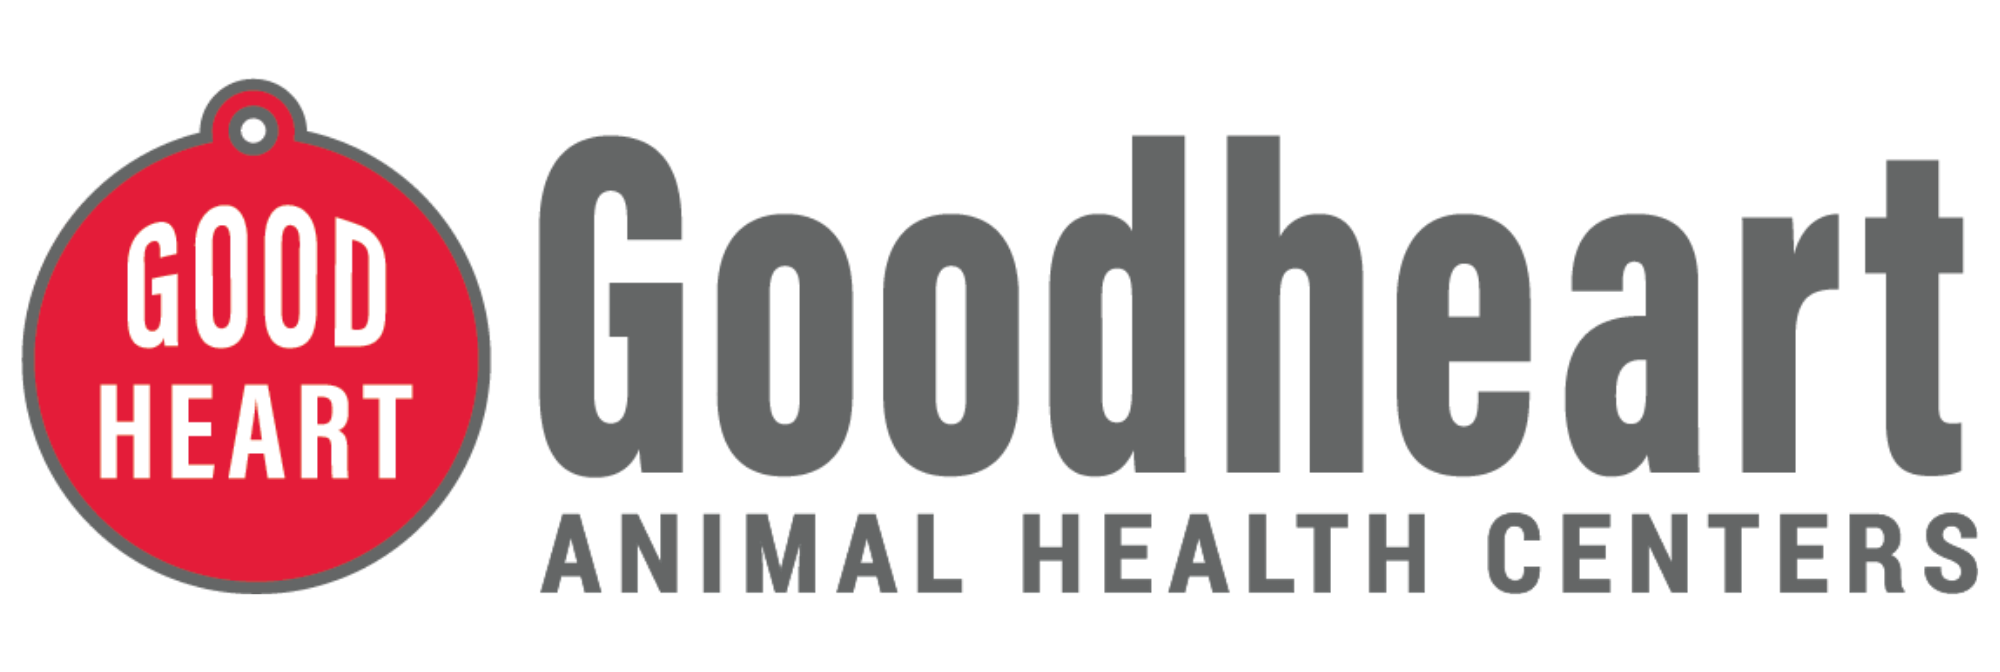 Goodheart Animal Health Centers